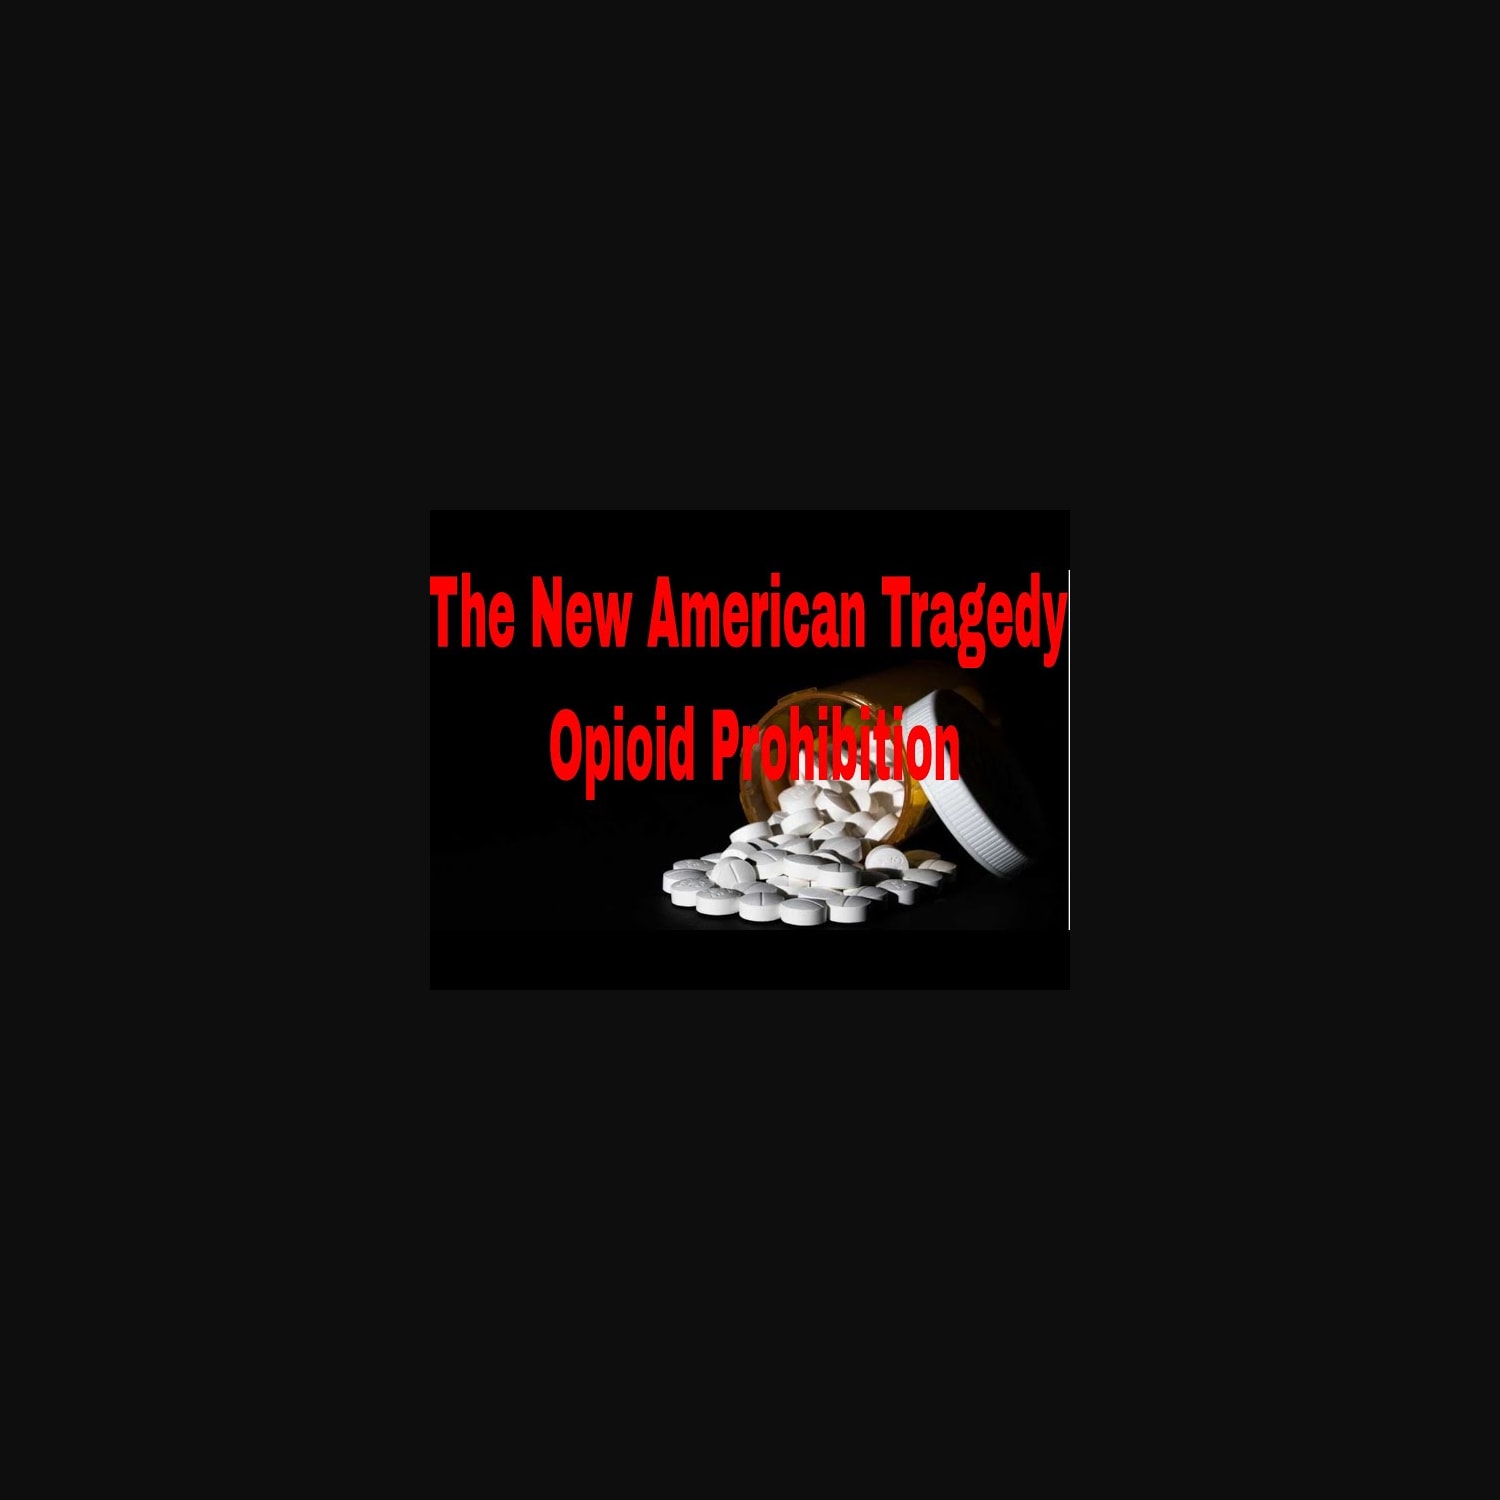 New American Tragedy: Opioid Prohibition #chronicpain #opioids #opioidprohibition